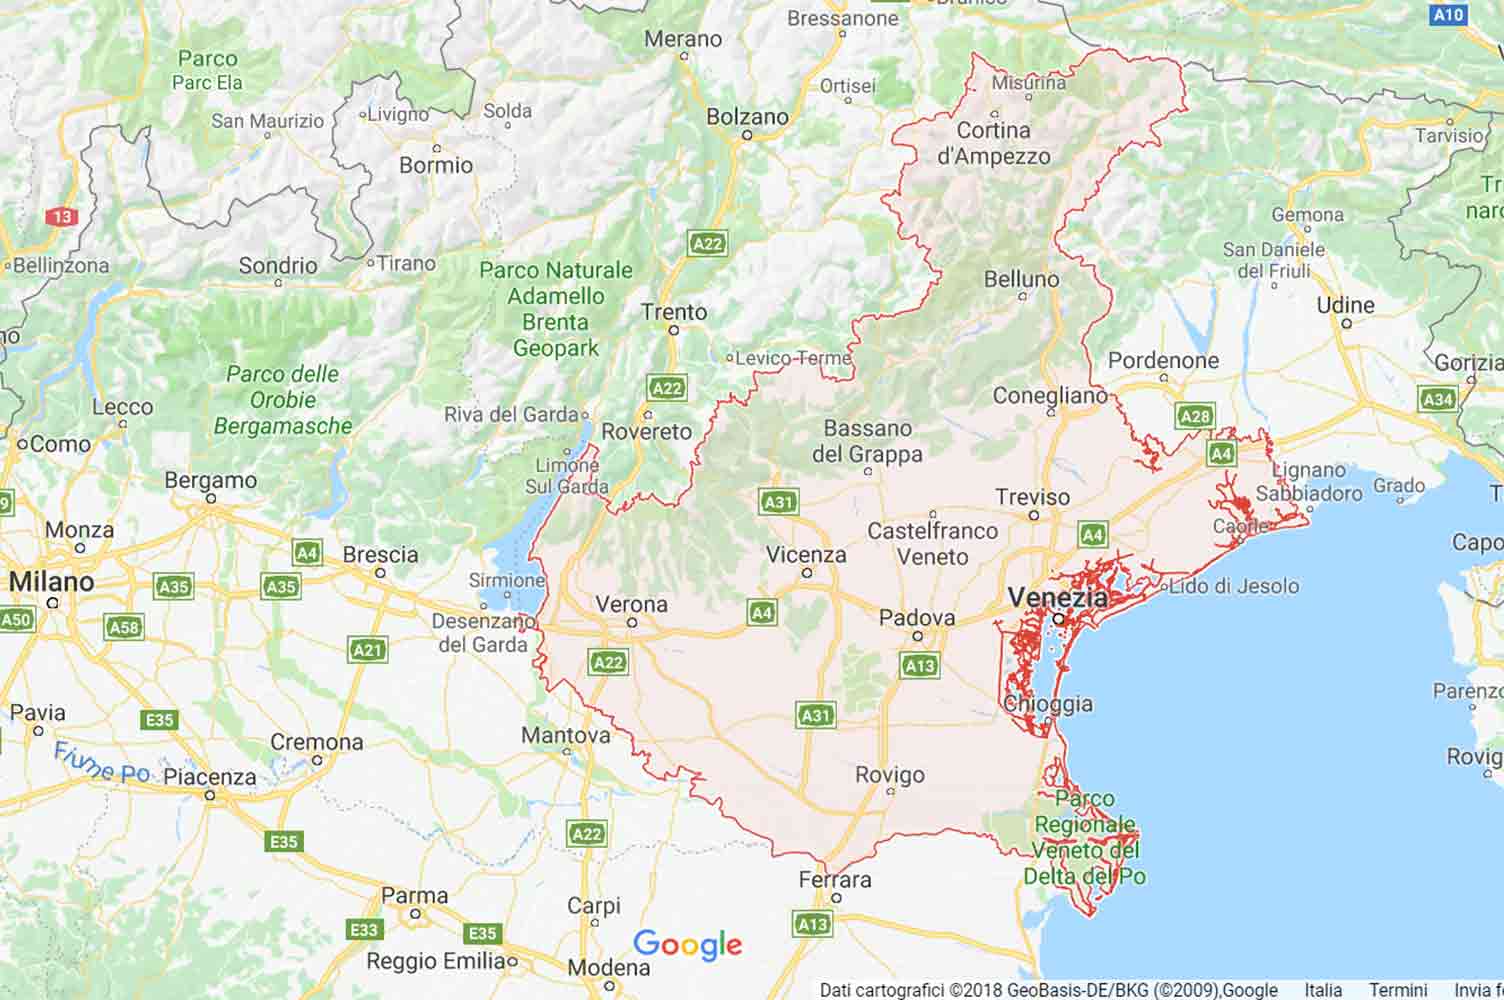 Veneto - Venezia - Noventa di Piave Preventivi Veloci google maps